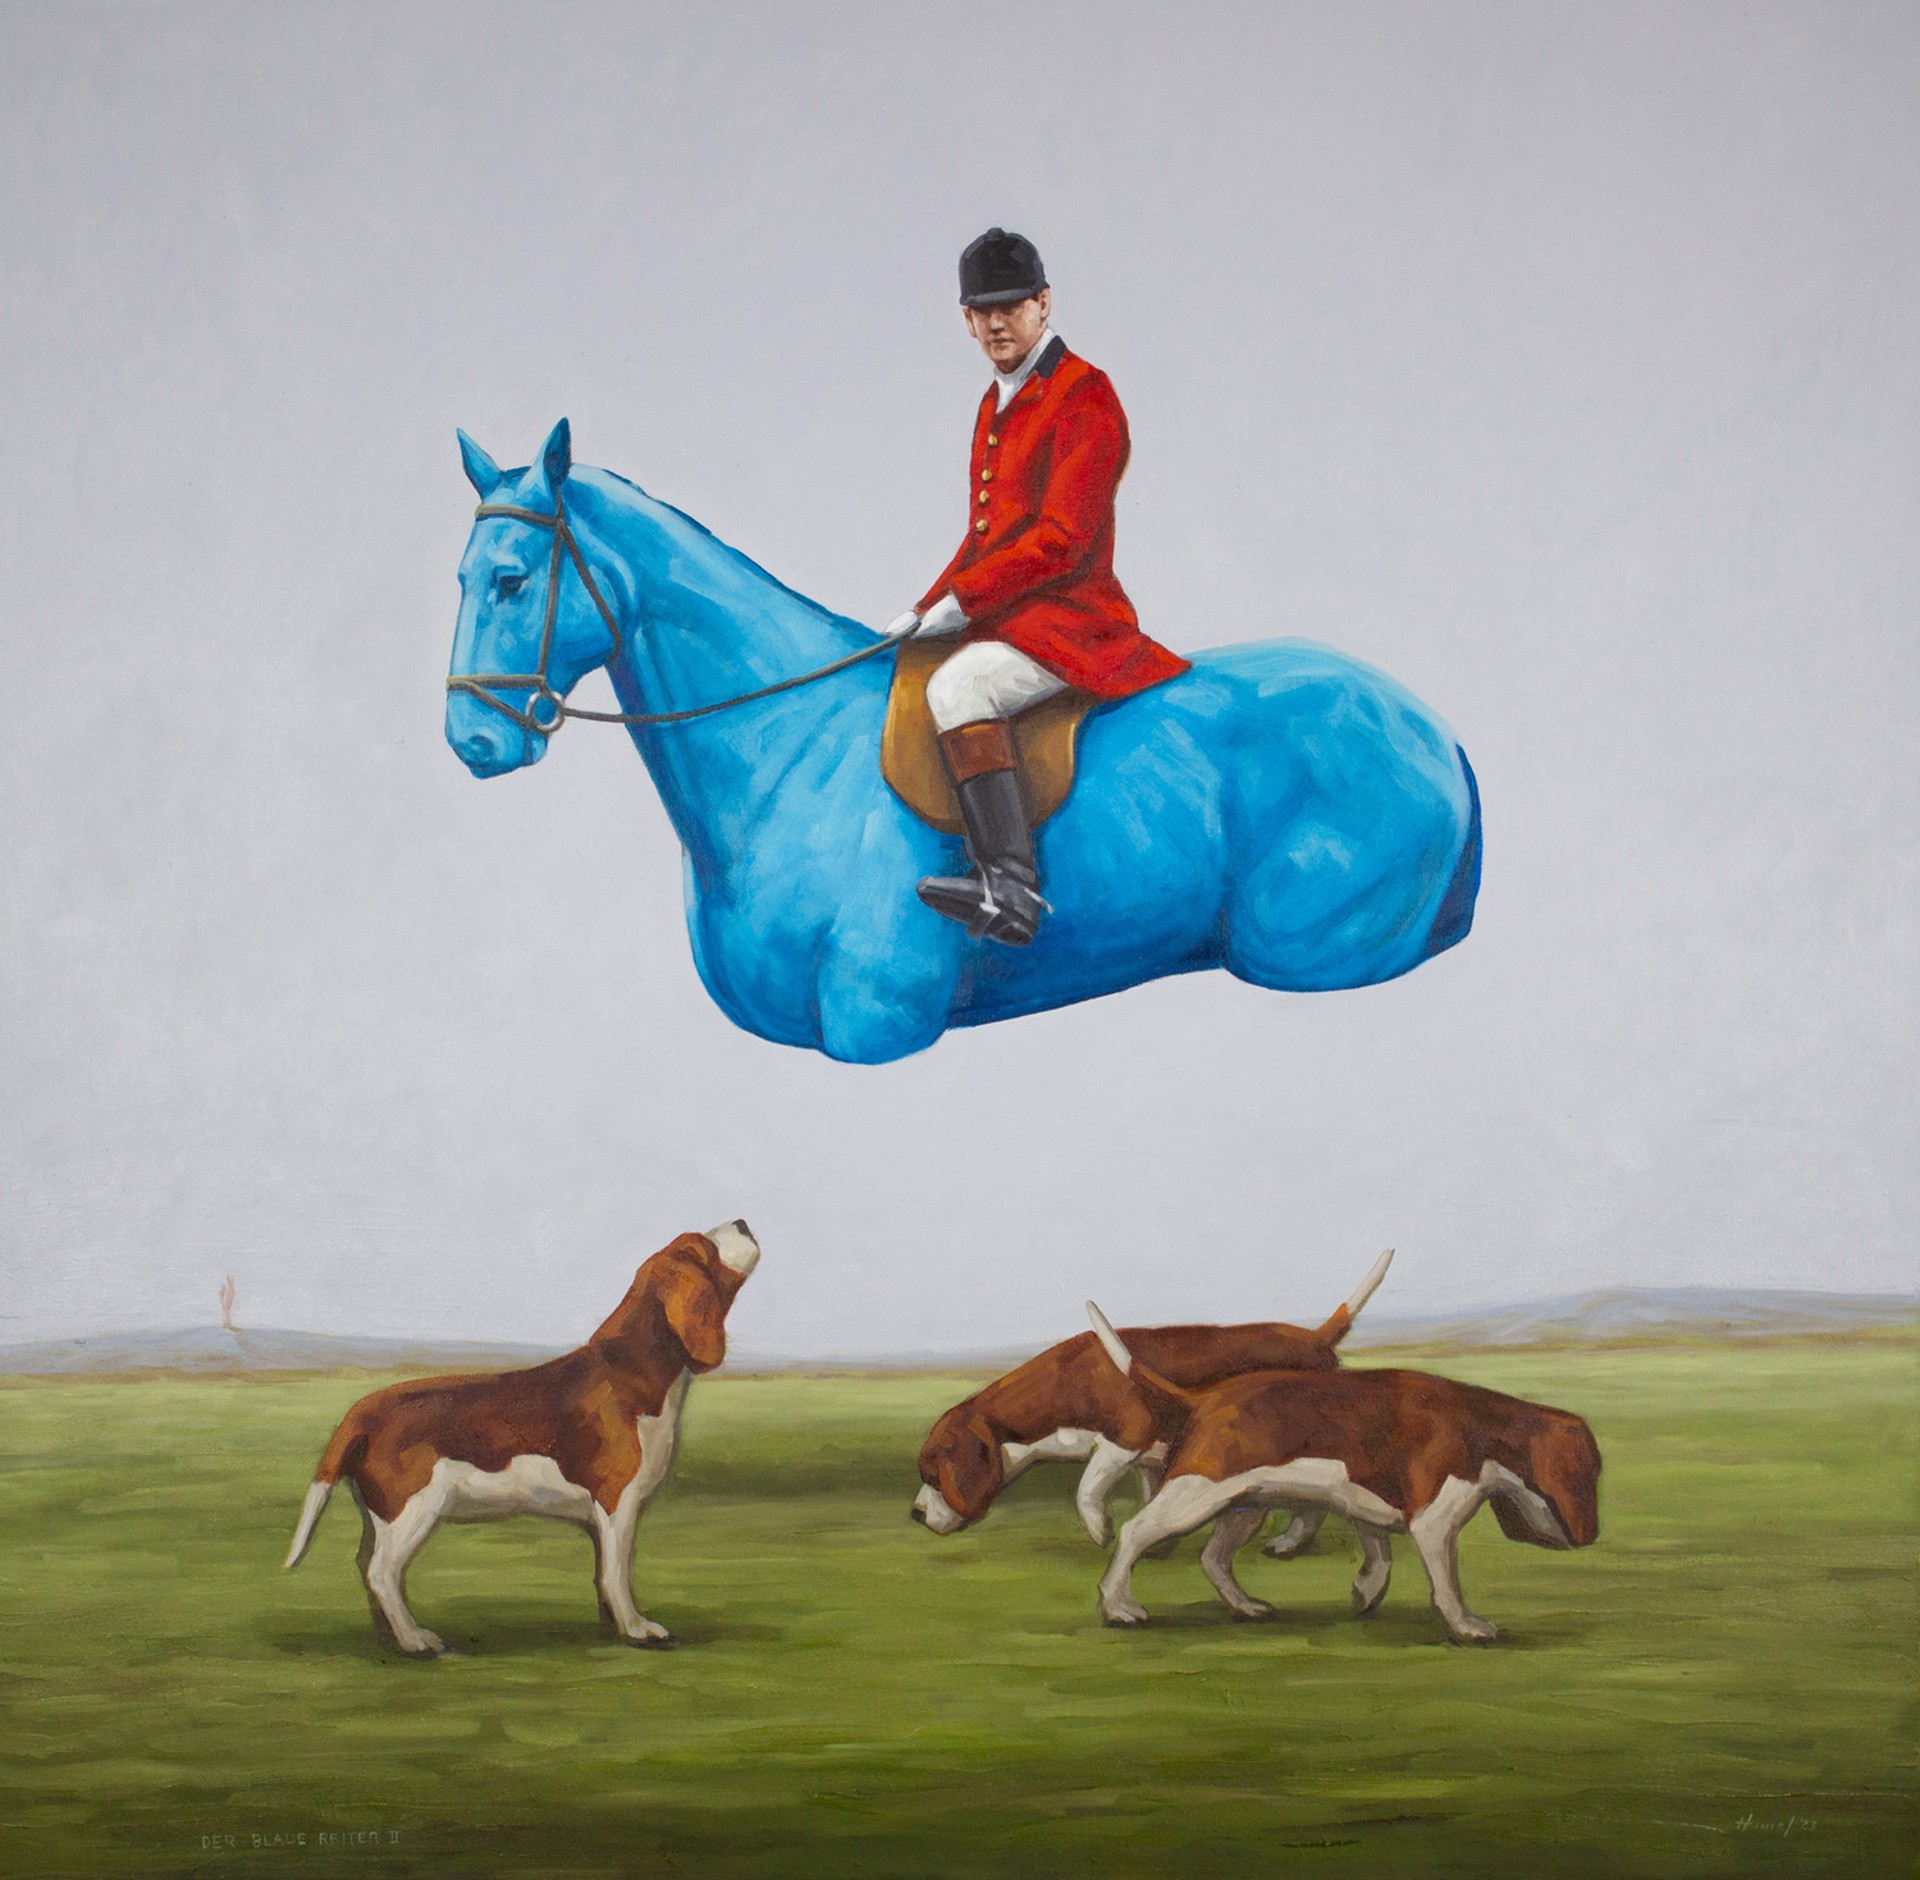 Der Blaue Reiter II by Toni Hamel